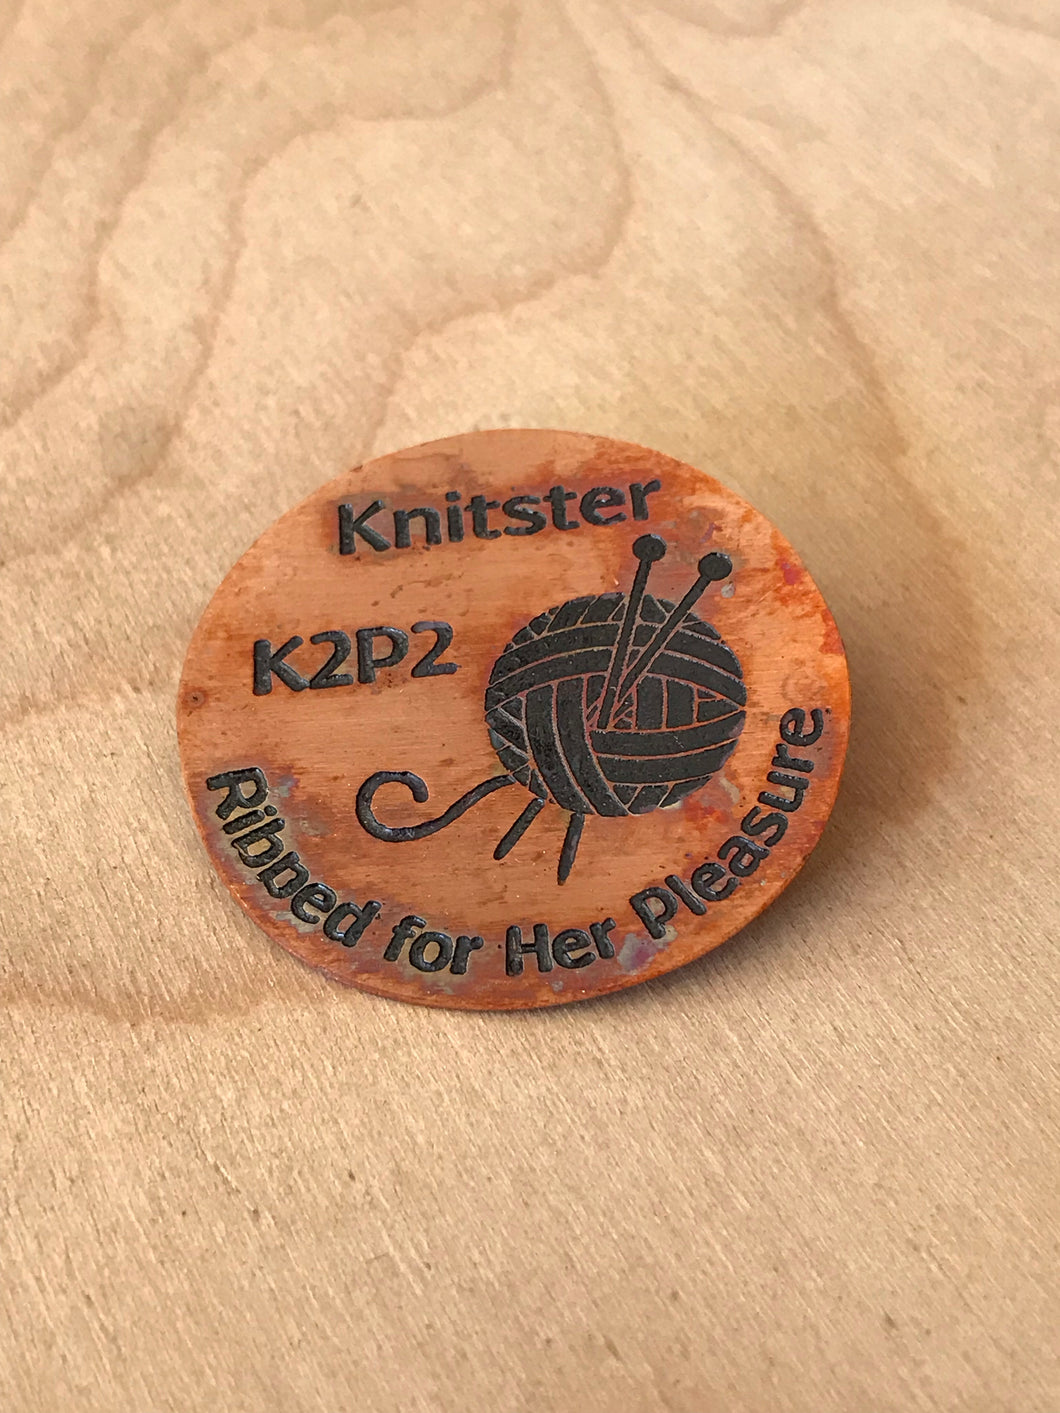 Knitster Medallion Pin